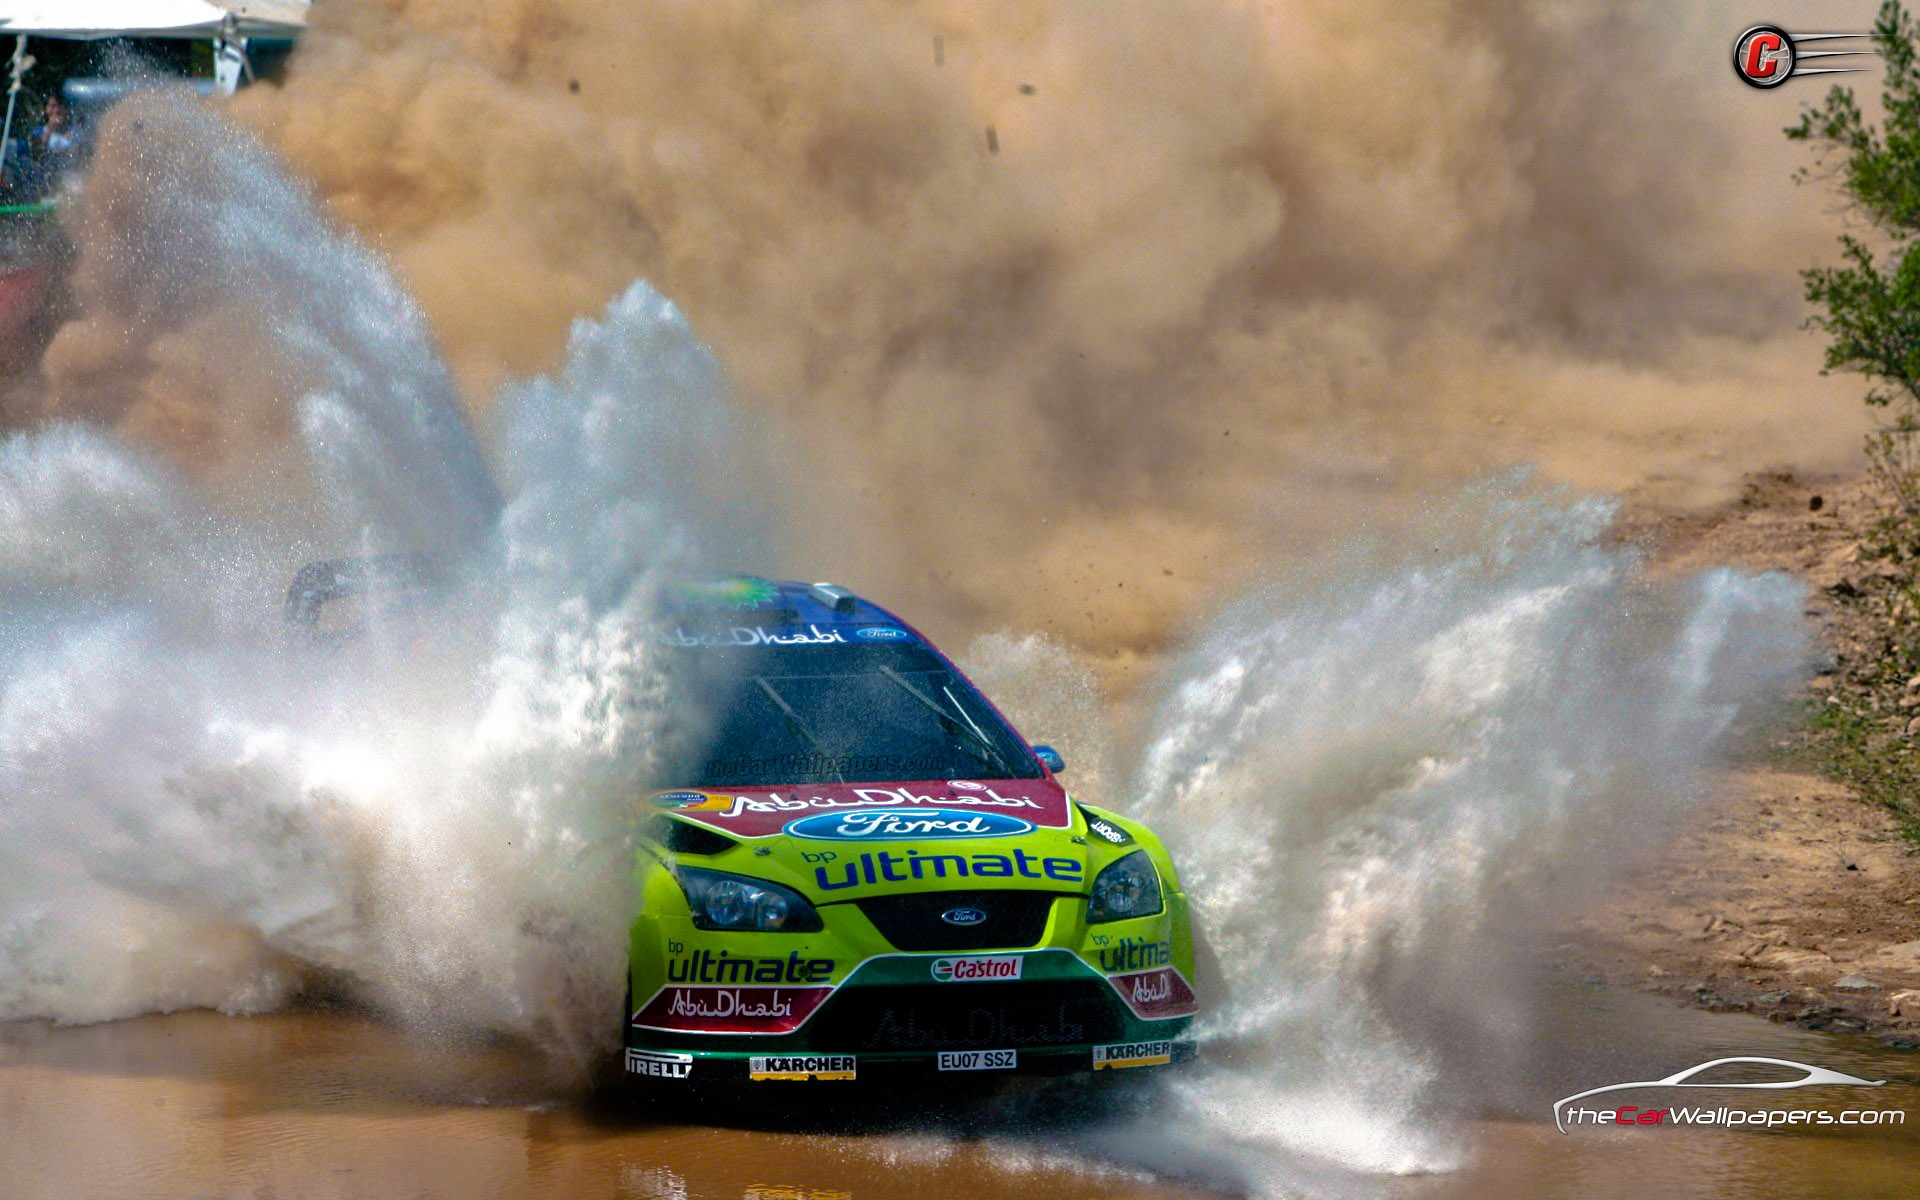 Download wallpaper: rally car wallpaper, download photo ...